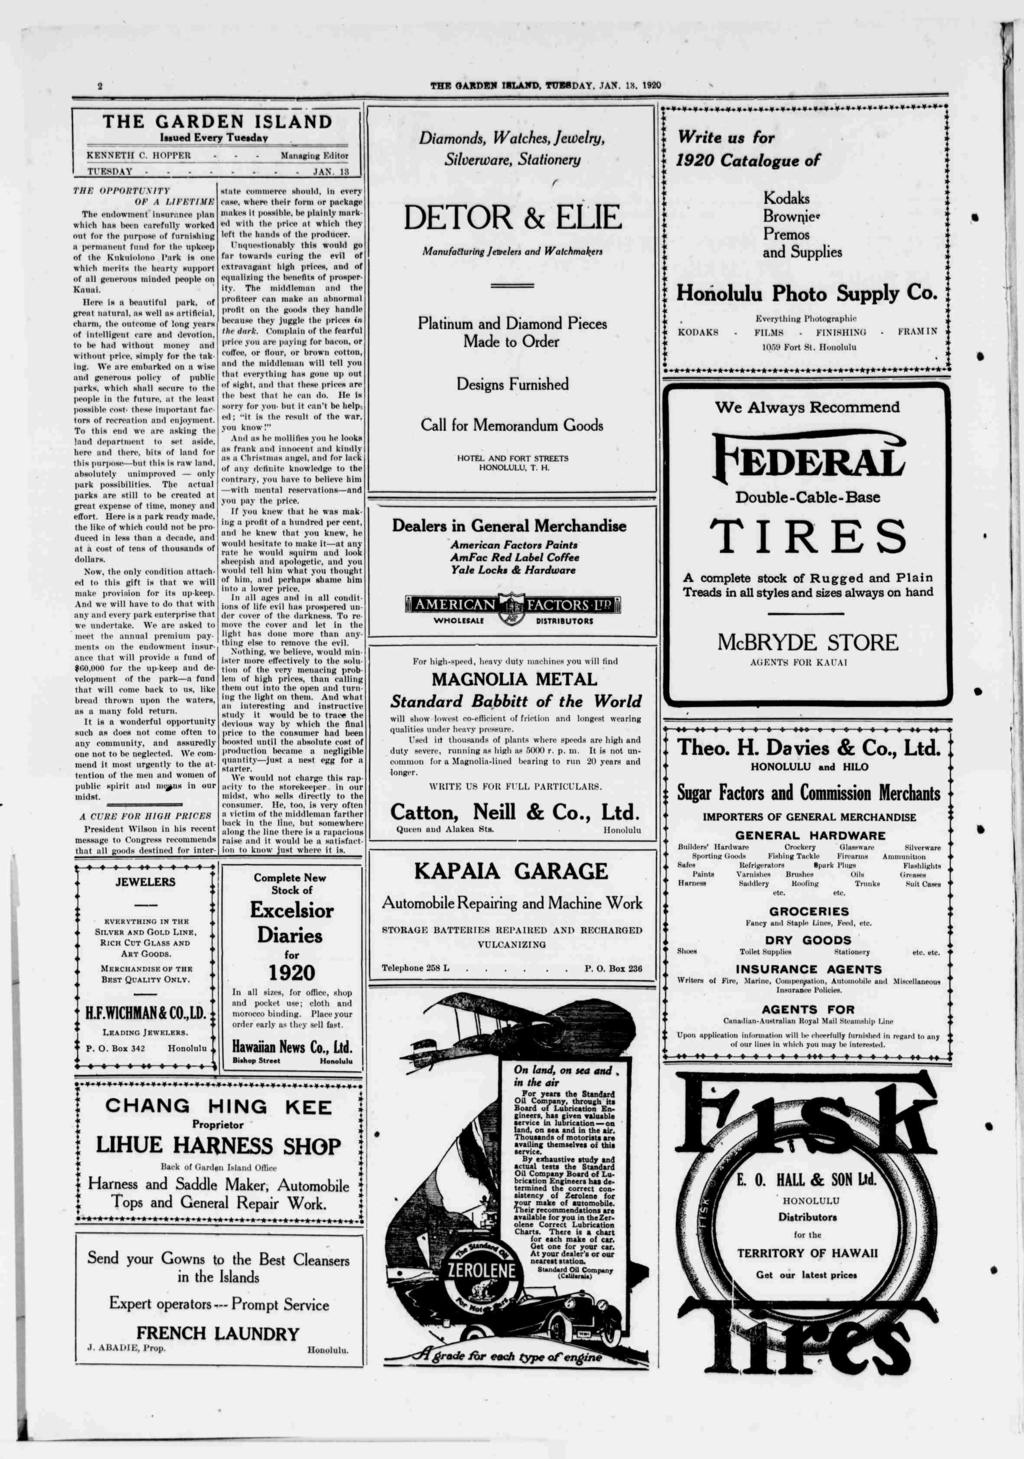 THE GARDEN SLAND, TUESDAY. AN. 18. 1920! THE GARDEN ssued Every Tuesday SLAND KENNETH C. HOPPER Managng Edor TUESDAY AN.